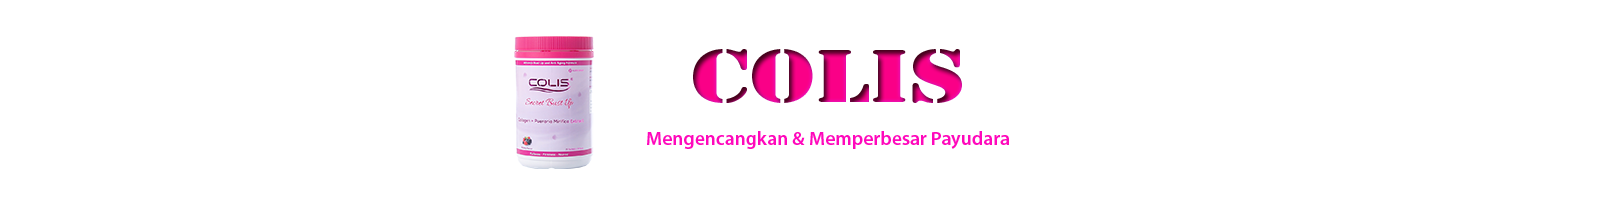 Collagen Pembesar Pengencang Payudara Colis Secret Bustup | Colis.com